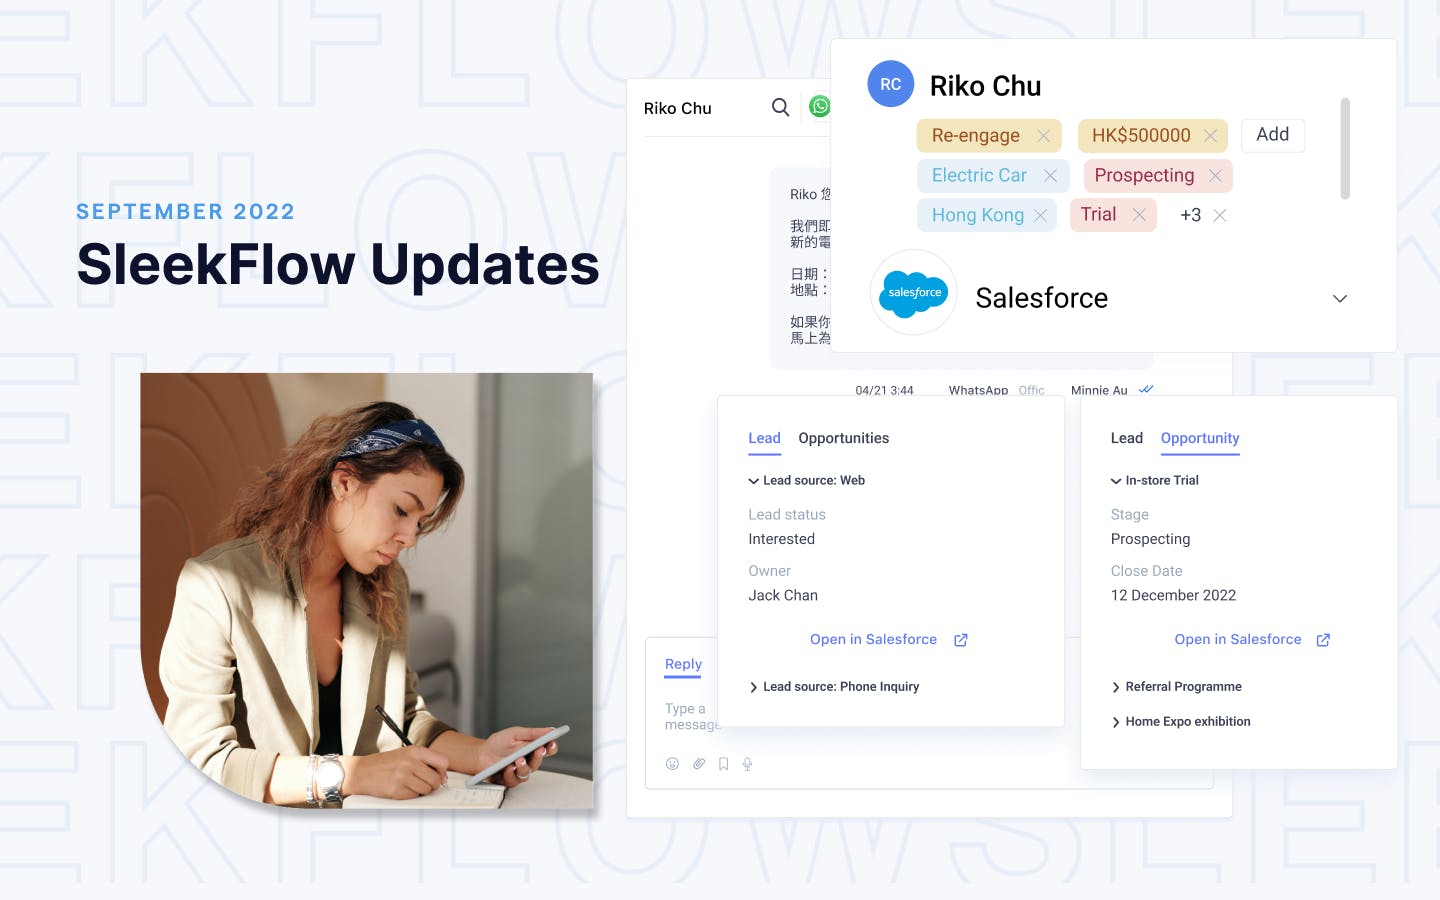 What's new in SleekFlow: 同步更新Salesforce 联络人、潜在客户及业务机会